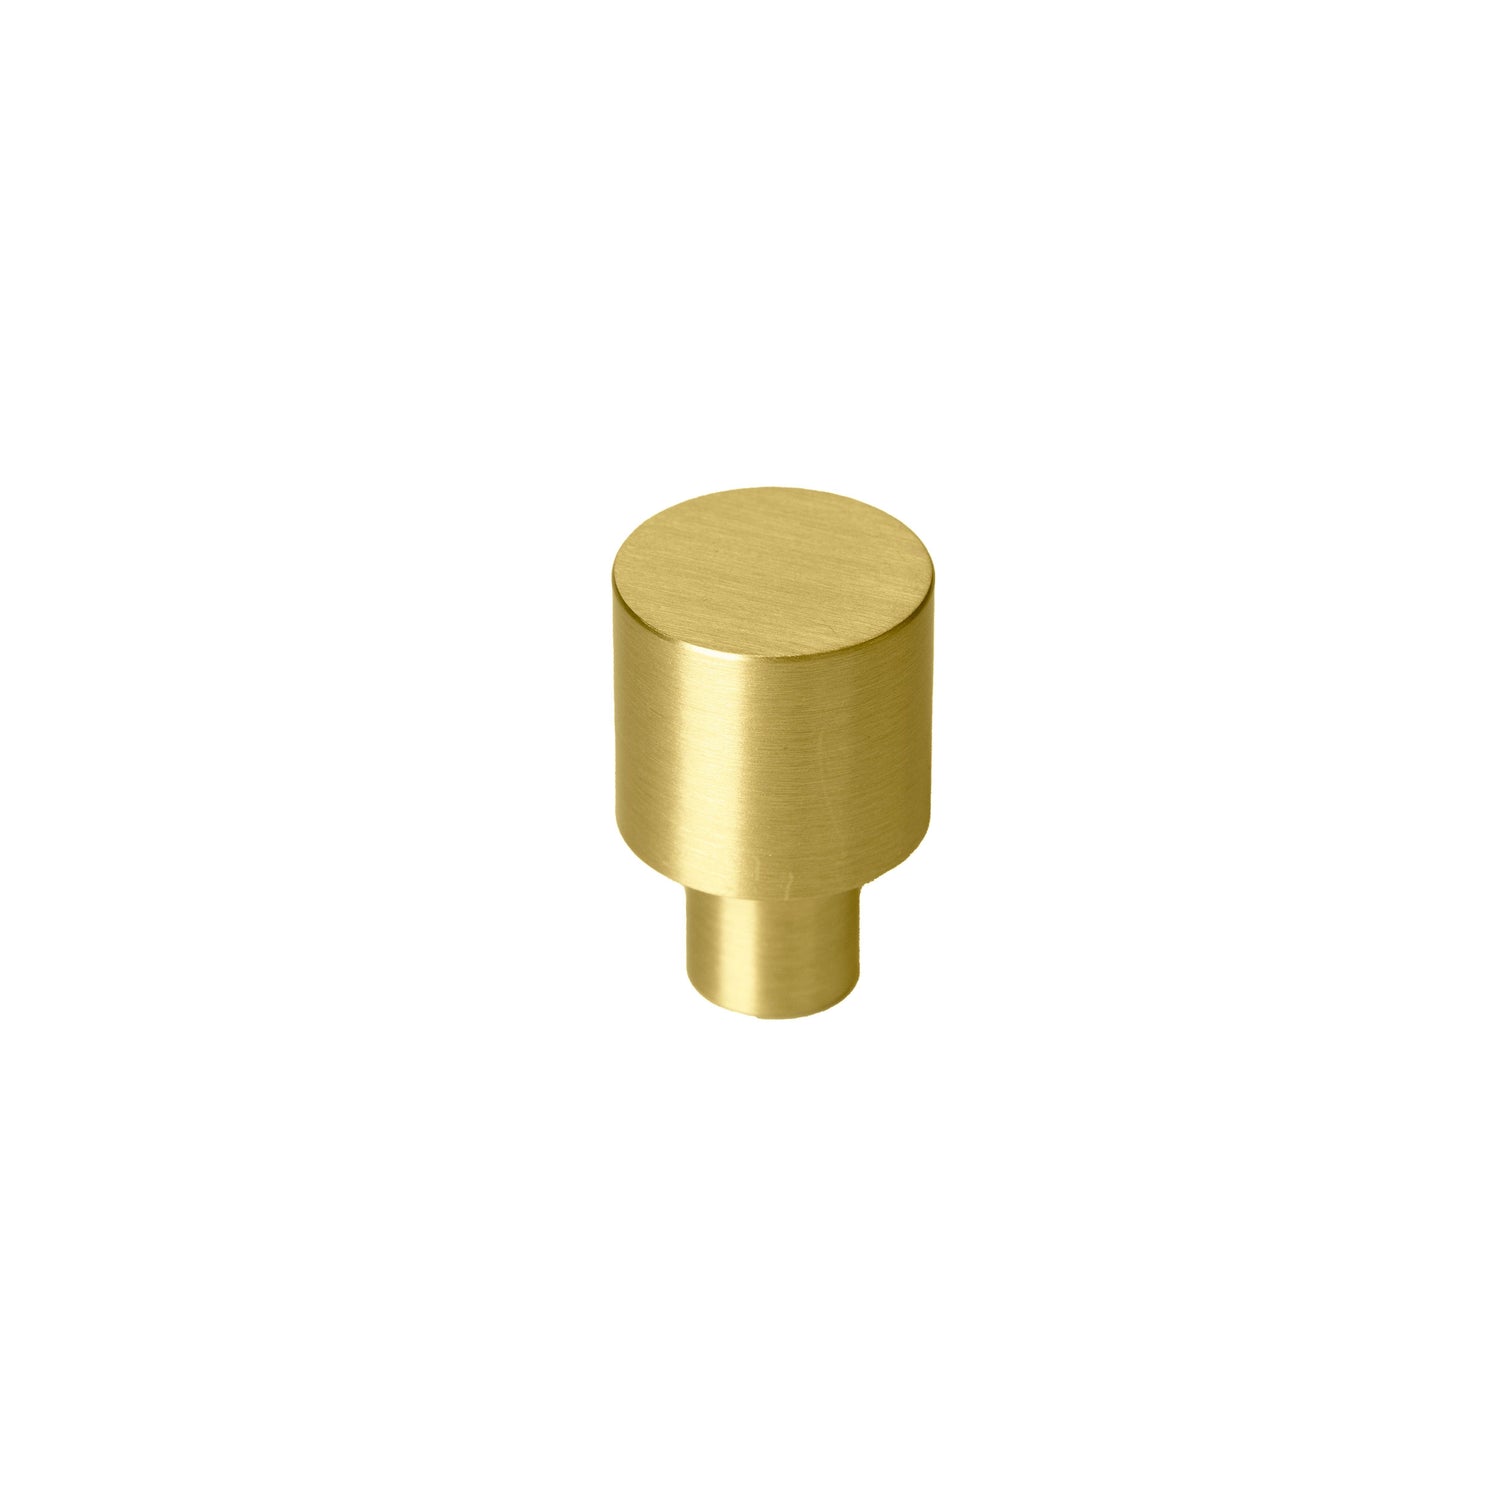 Ornate Gold Knob Knob - M A N T A R A